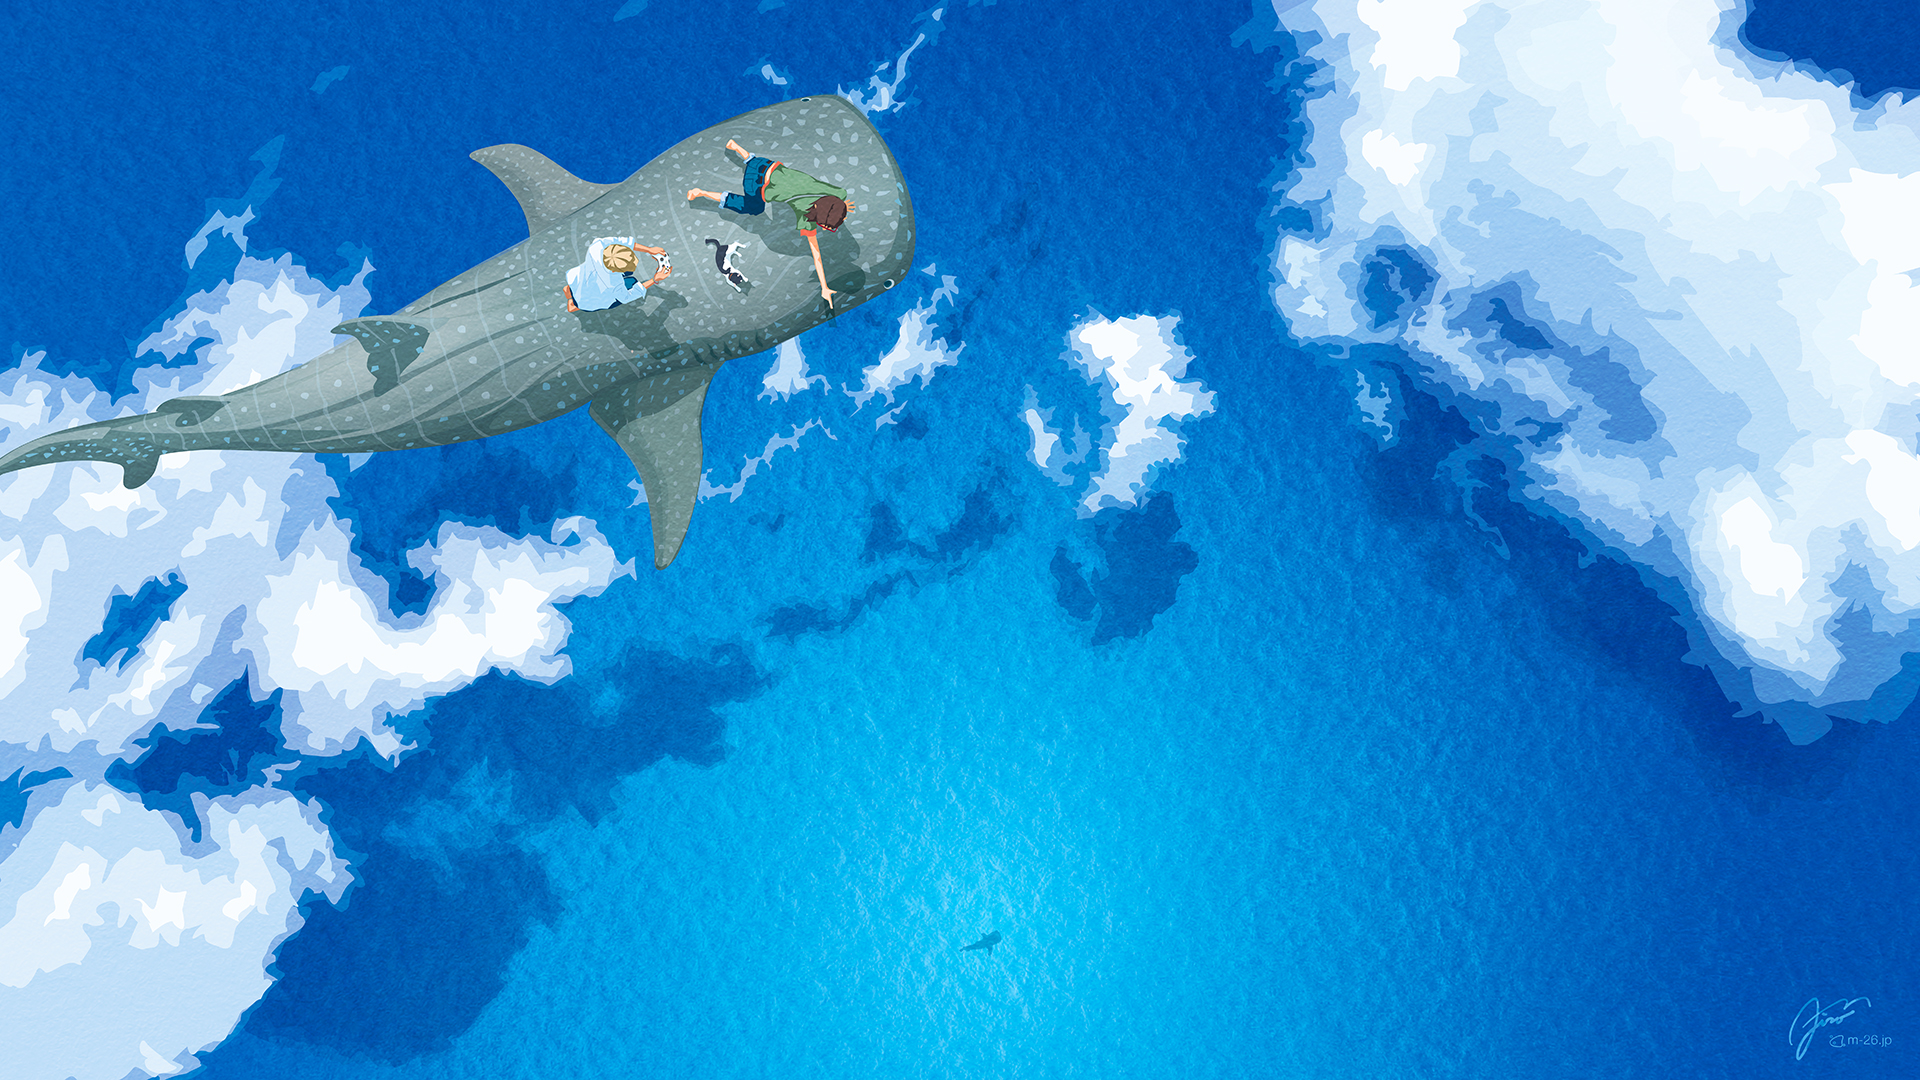 Artwork Digital Art Illustration Fantasy Art Whale Shark Children Cats Clouds Shadow Watermarked 1920x1080